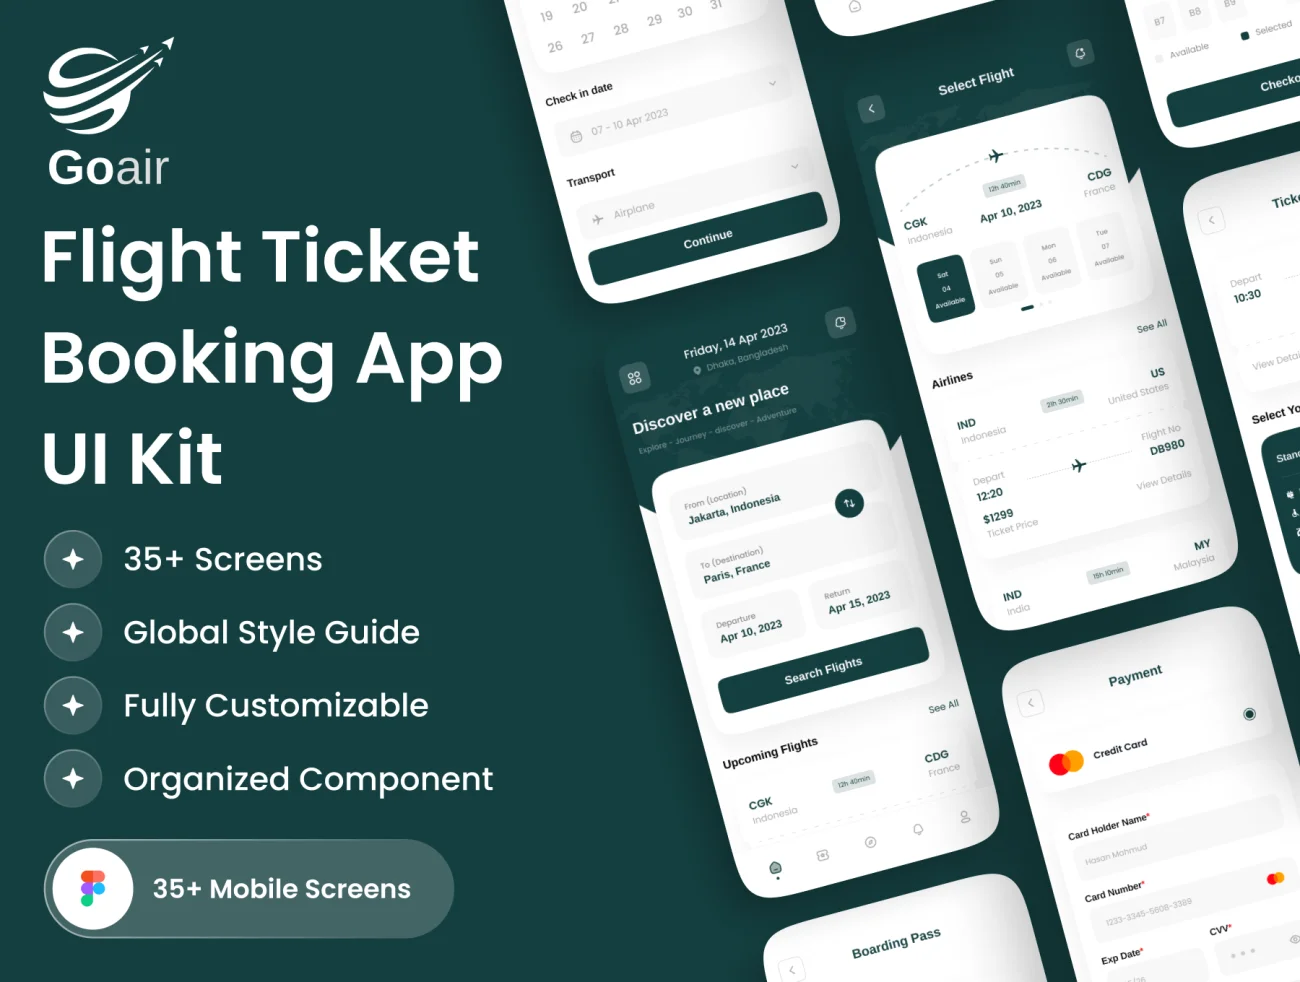 Goair-机票预订应用UI工具包 Goair - Ticket Booking App UI Kit android格式缩略图到位啦UI